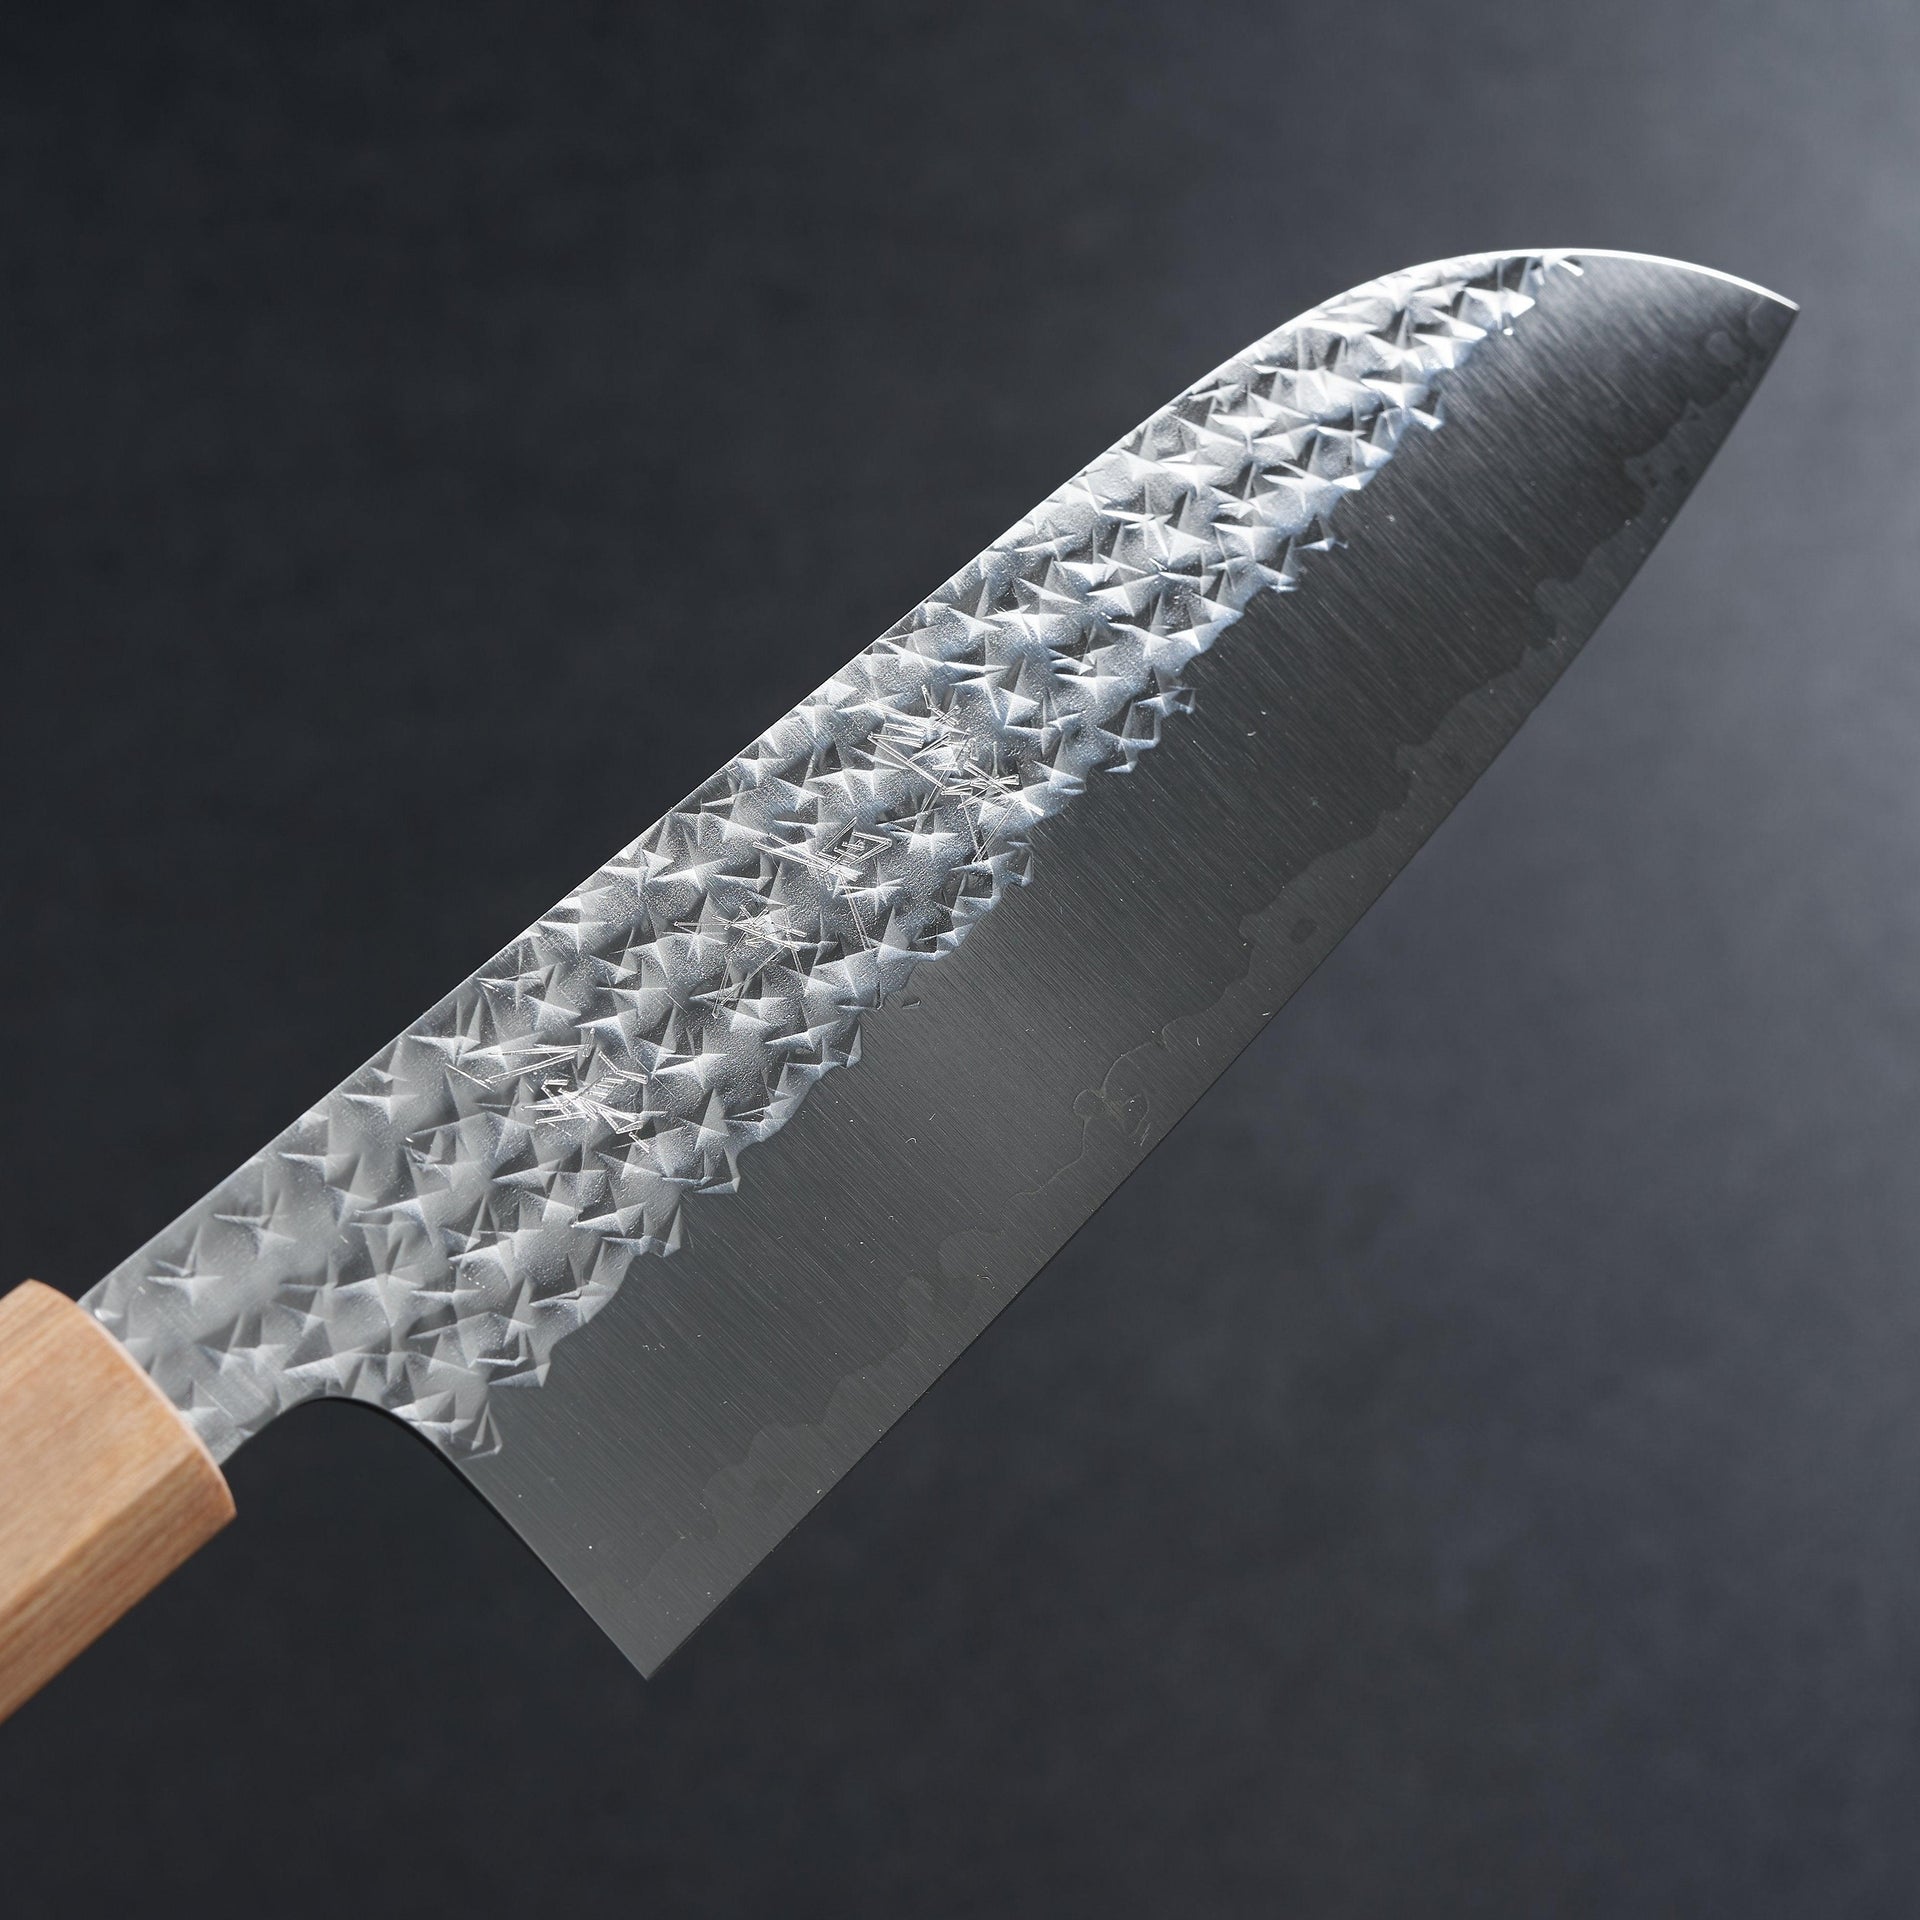 Yu Kurosaki R2 Senko Santoku 165mm-Knife-Yu Kurosaki-Carbon Knife Co